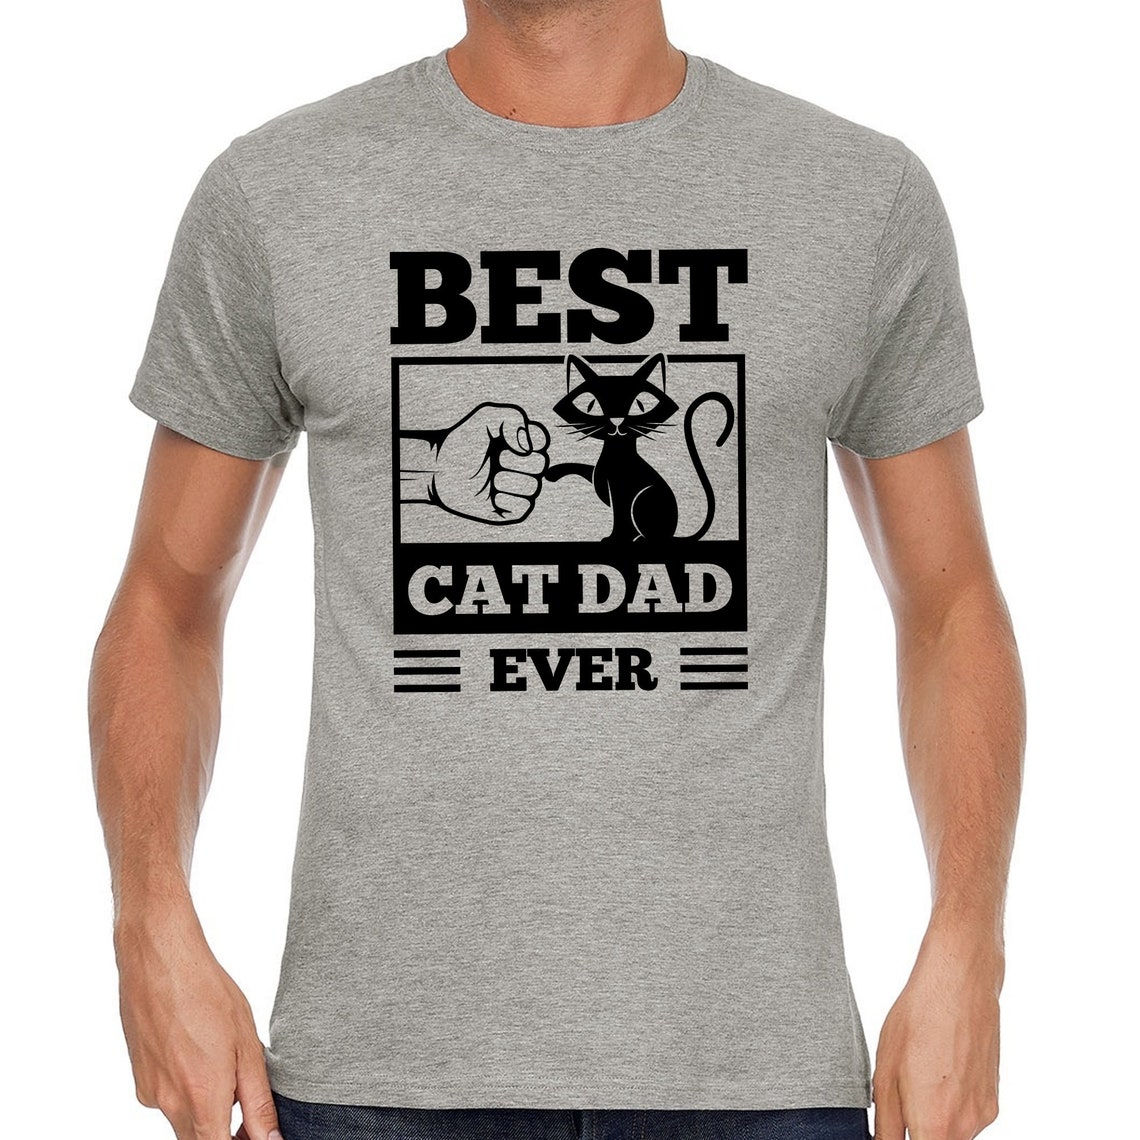 BEST CAT DAD Ever Fistbump Fist Bump Funny Kitty